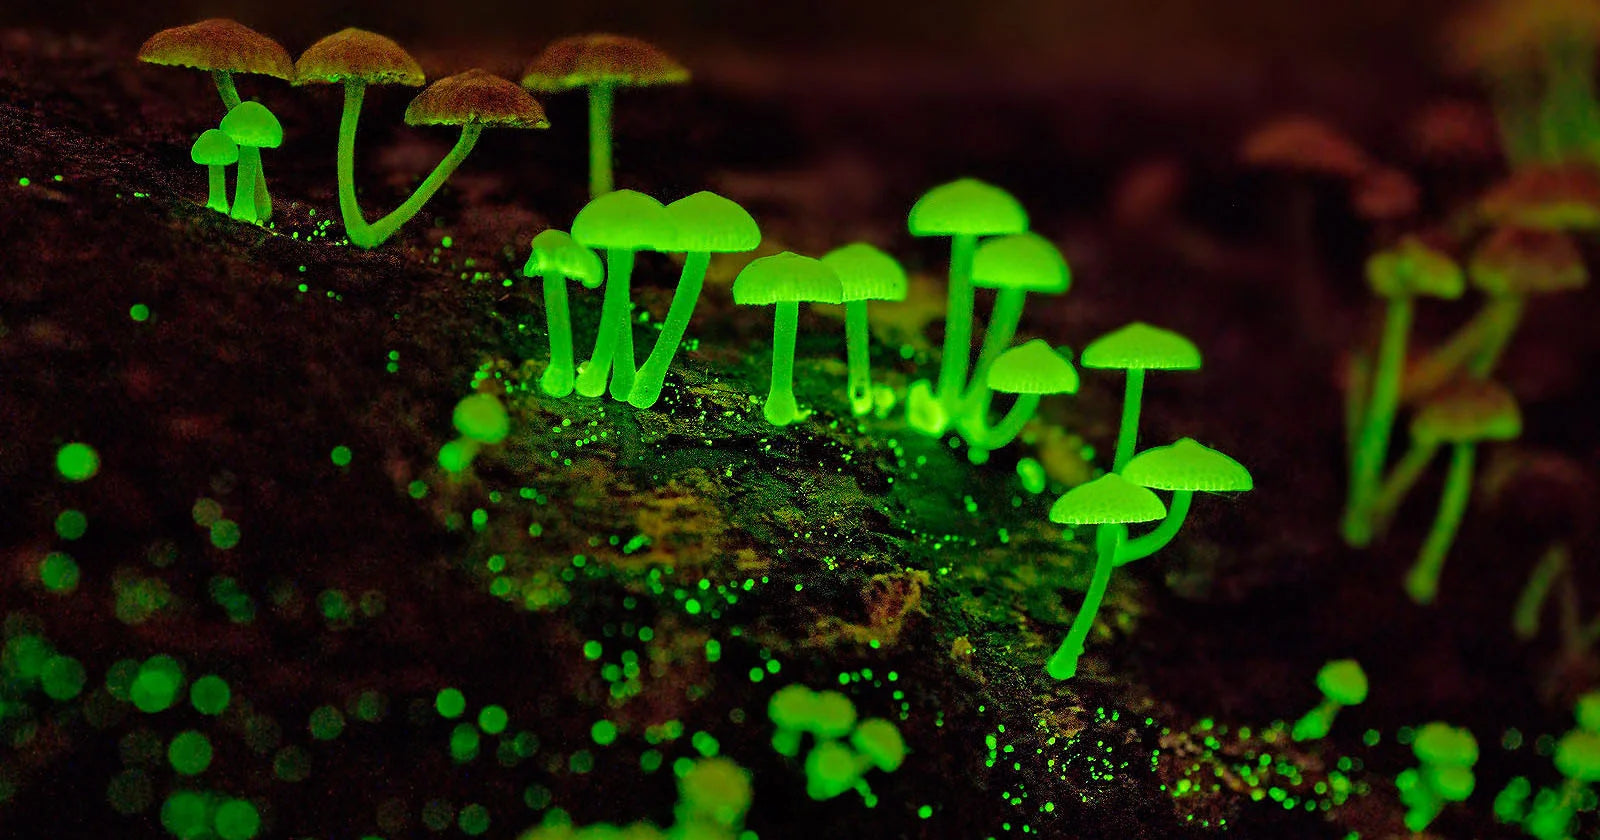 Mushrooms that glow in the dark?